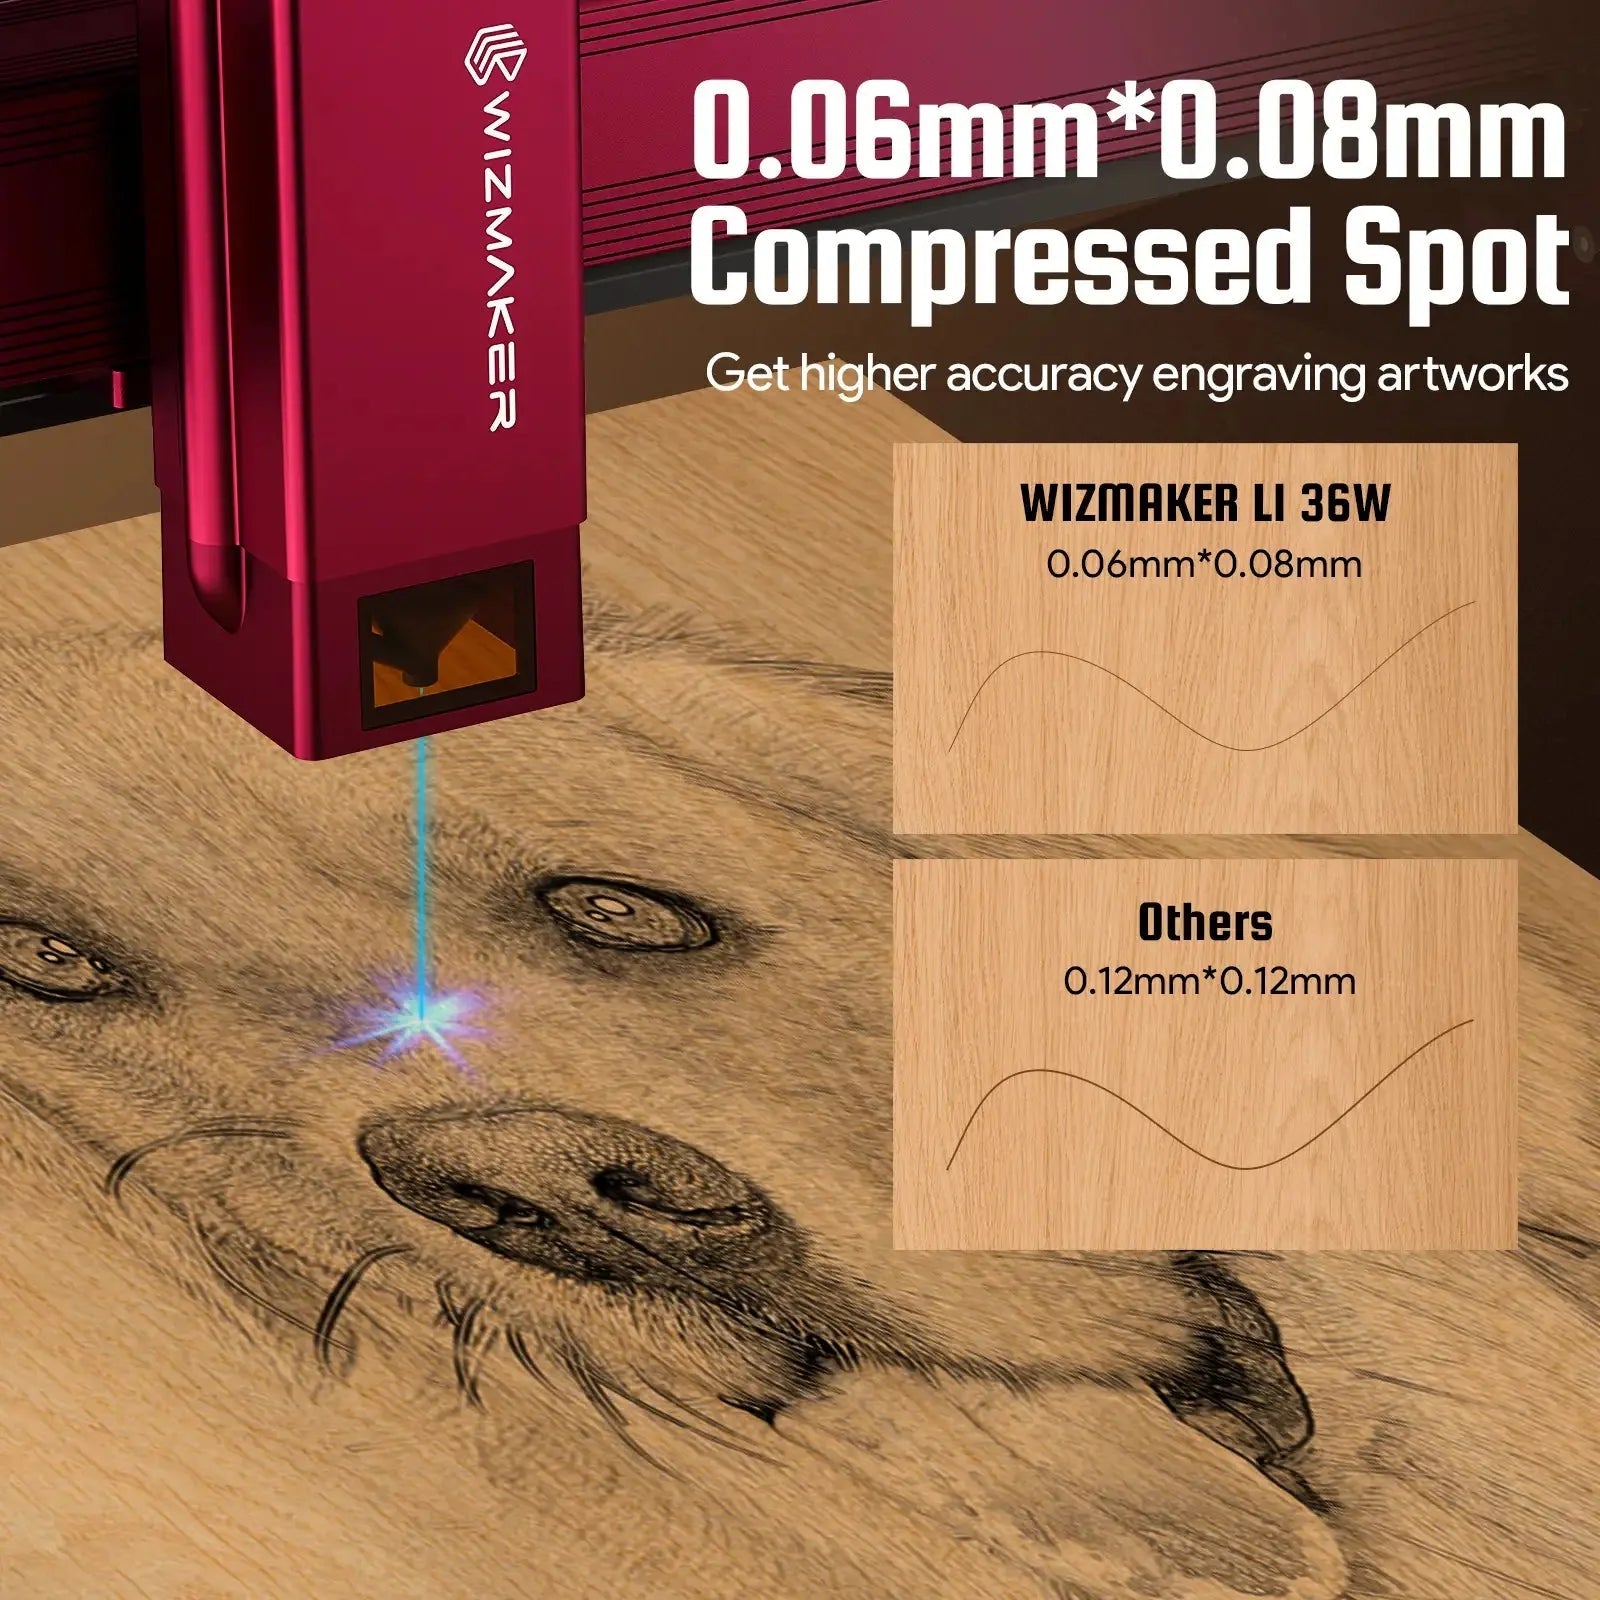 Copy of WIZMAKER L1 36W Laser Engraver Cutting Machine Deluxe Kit WIZMAKER 